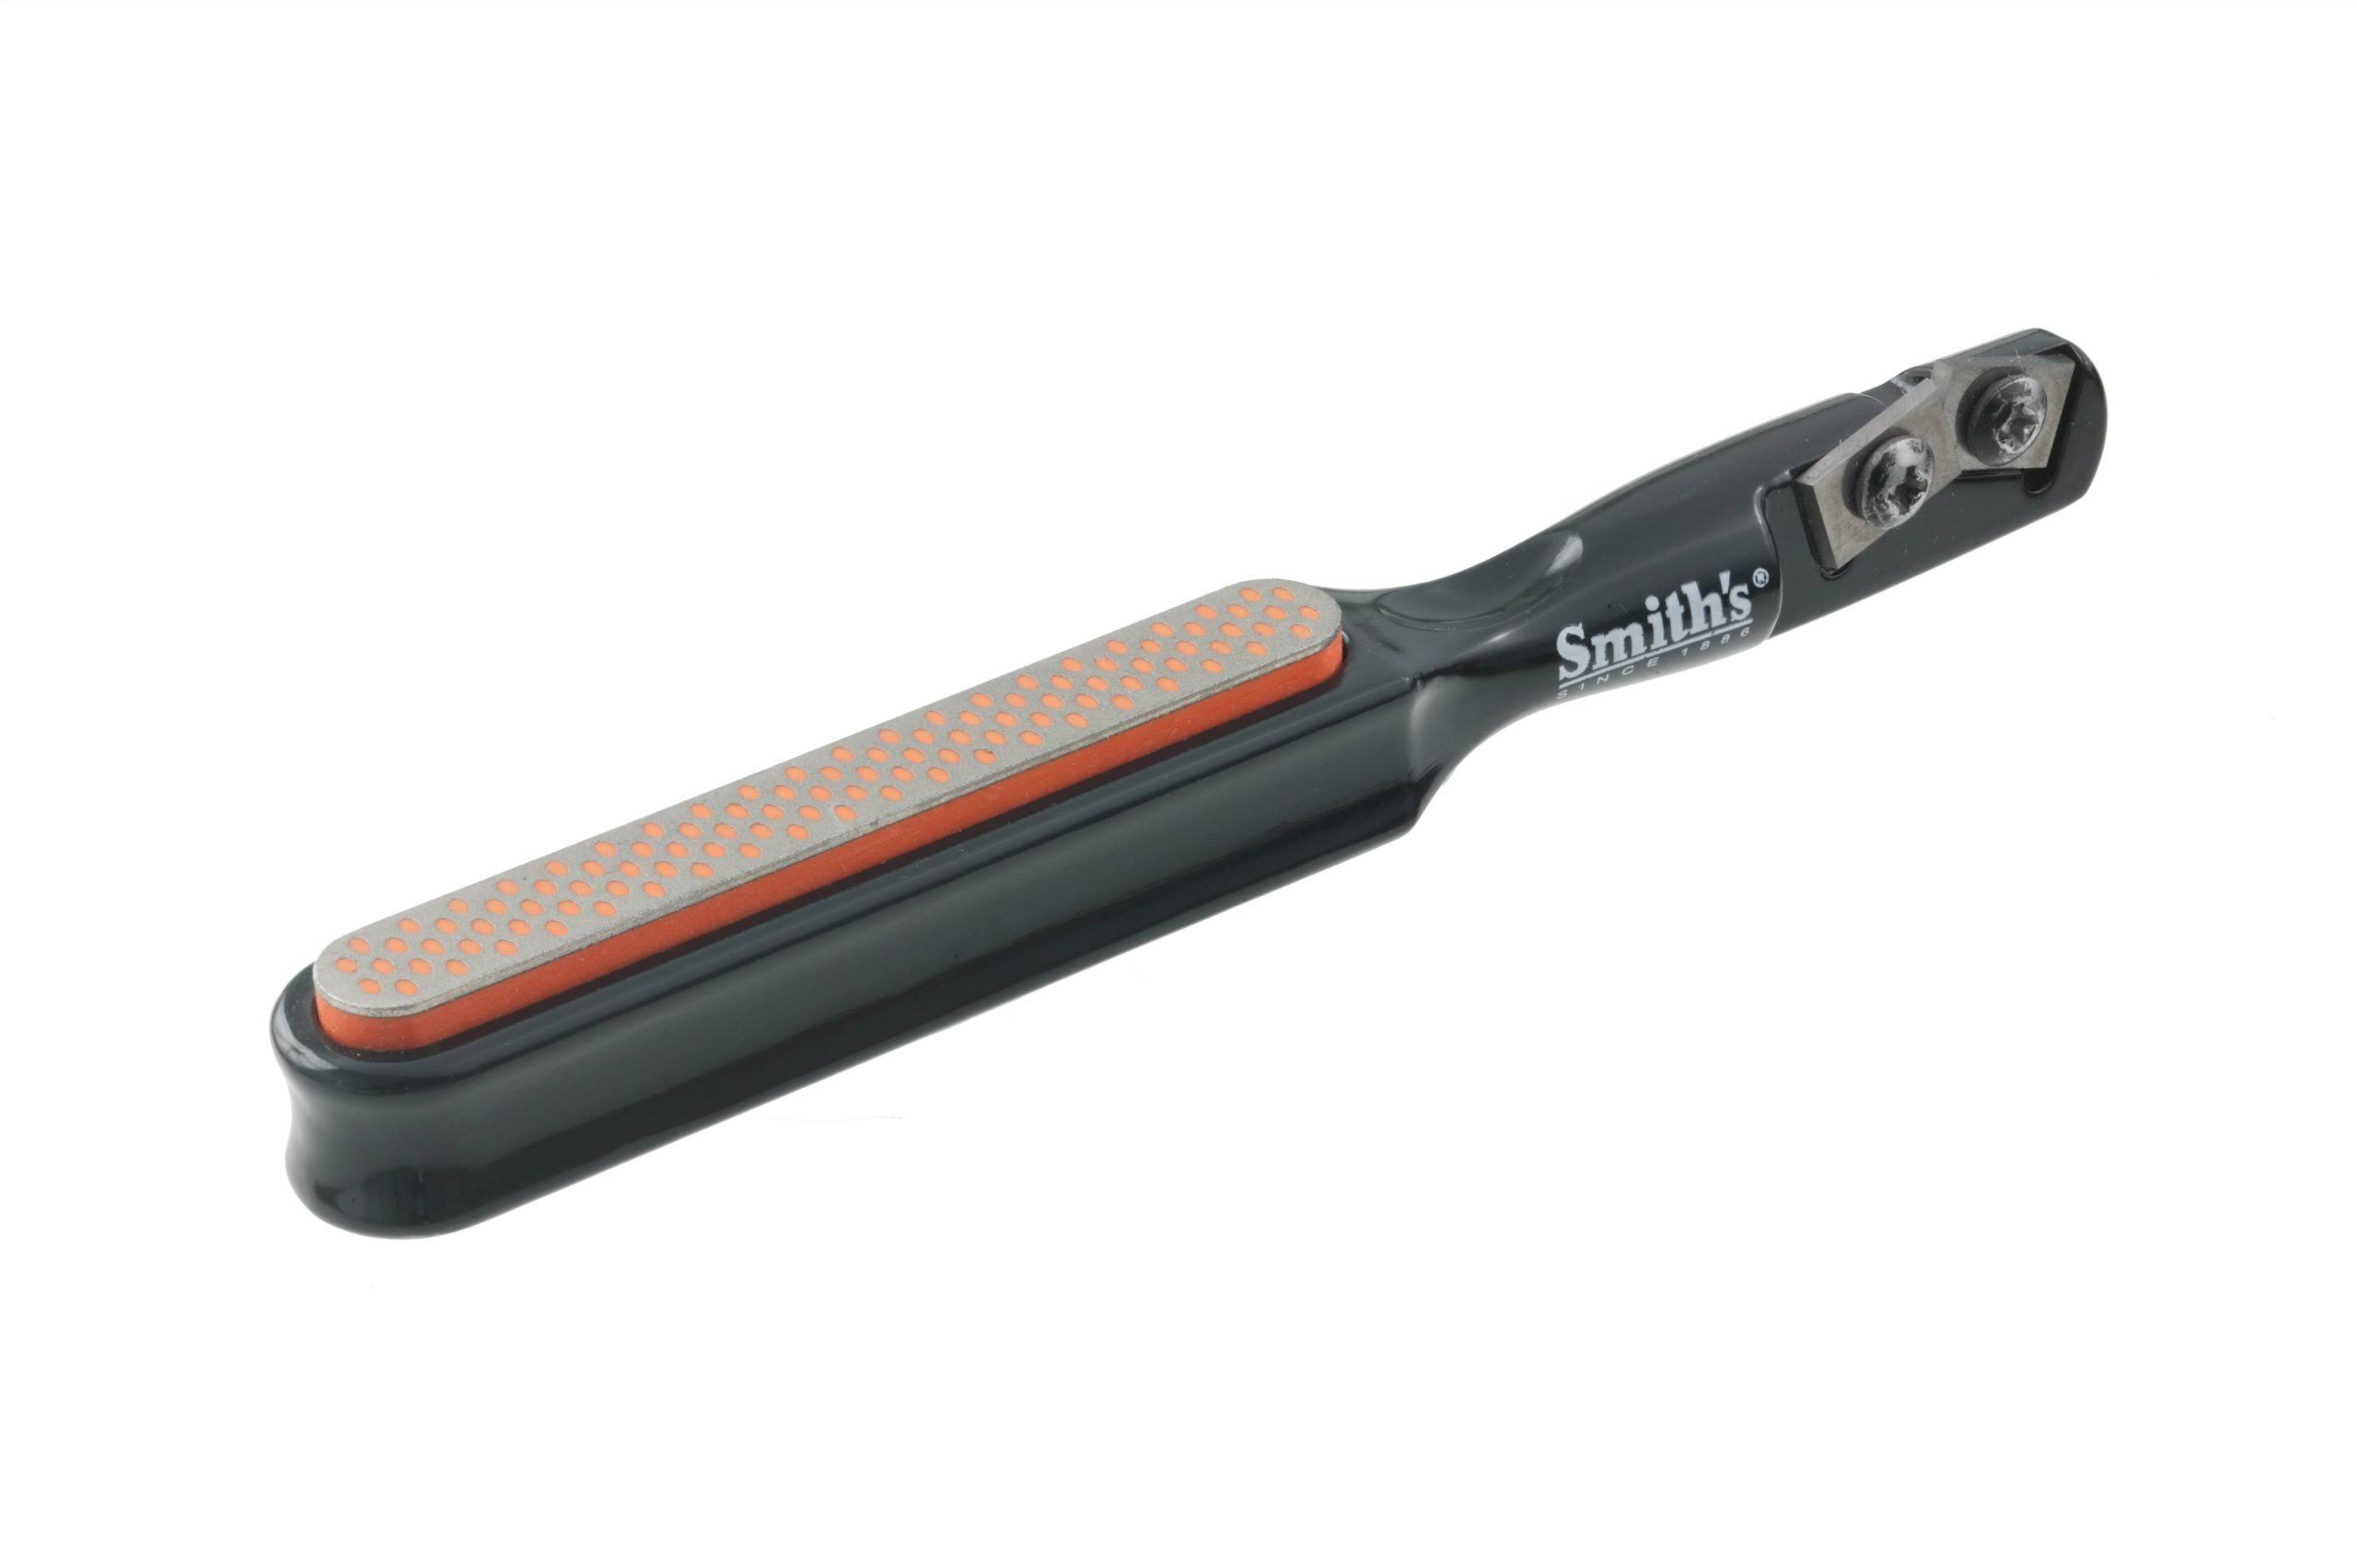 Smith's Edge Stick Knife Sharpener